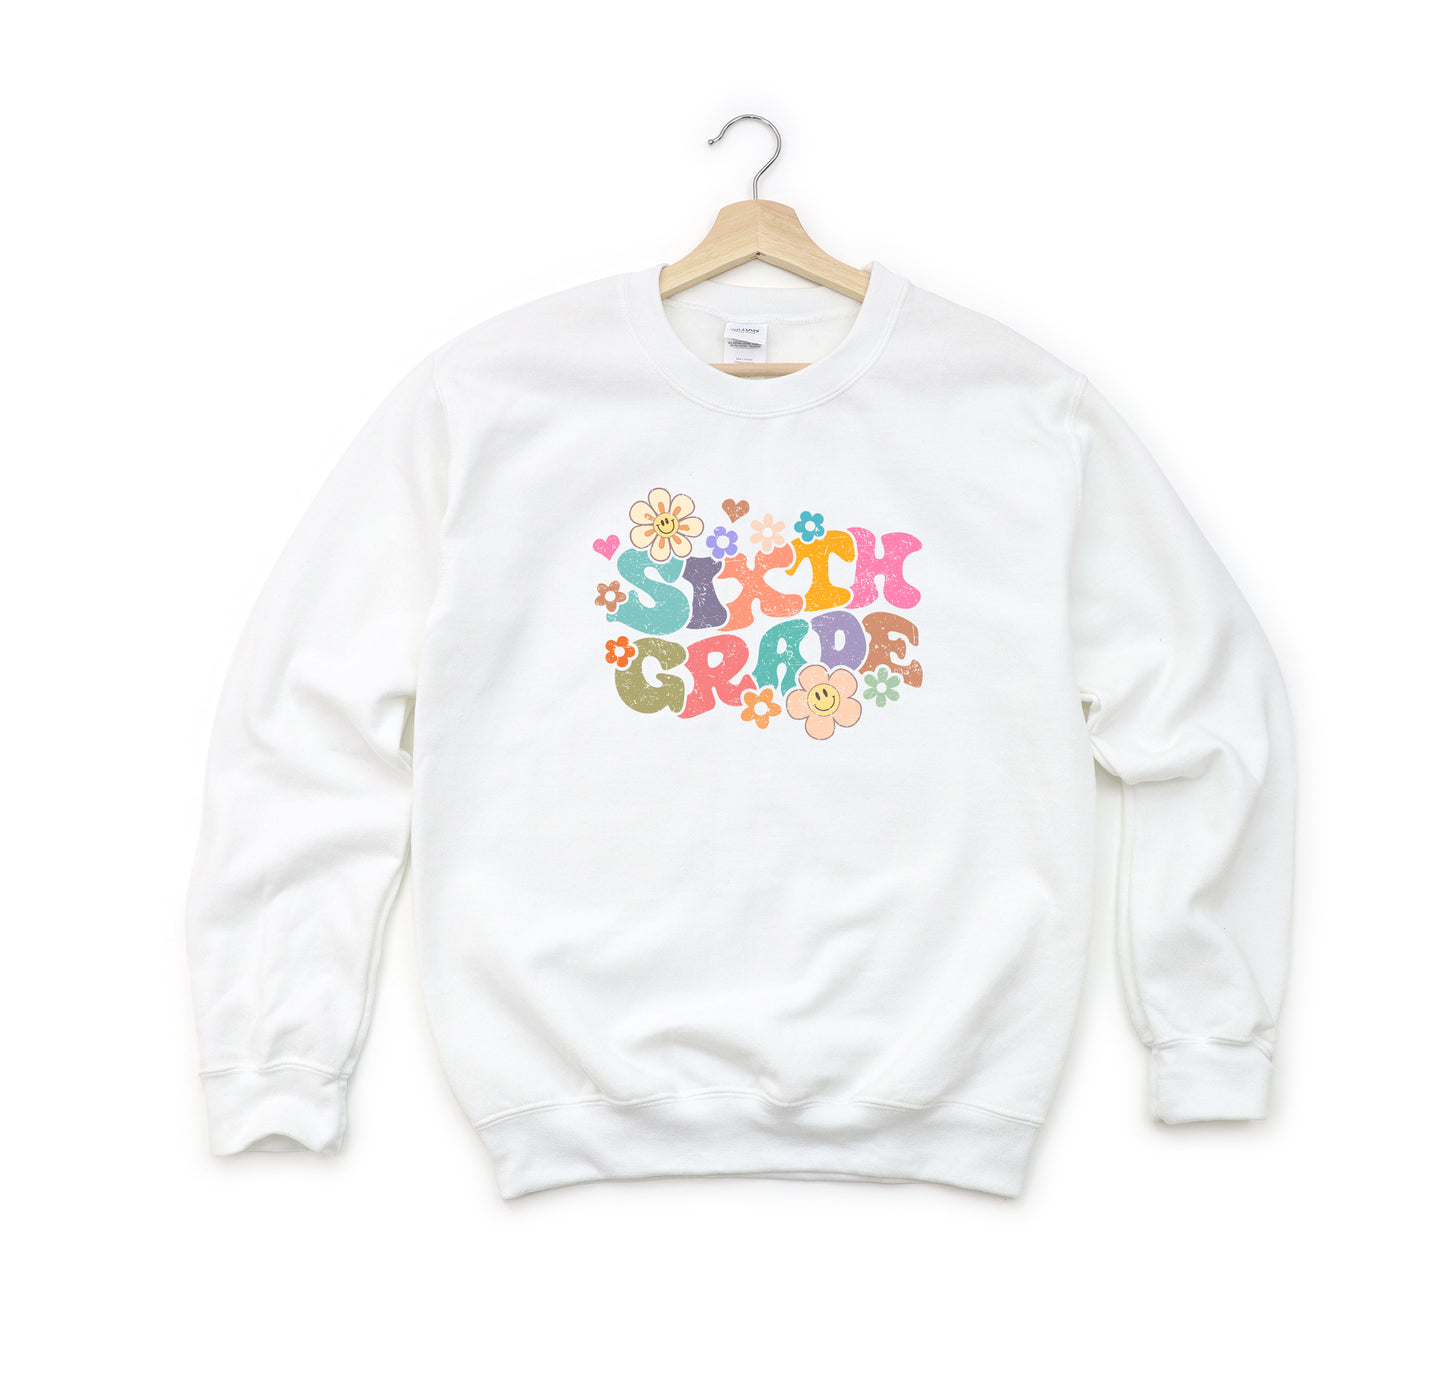 Sixth Grade Flowers | Youth Graphic Sweatshirt